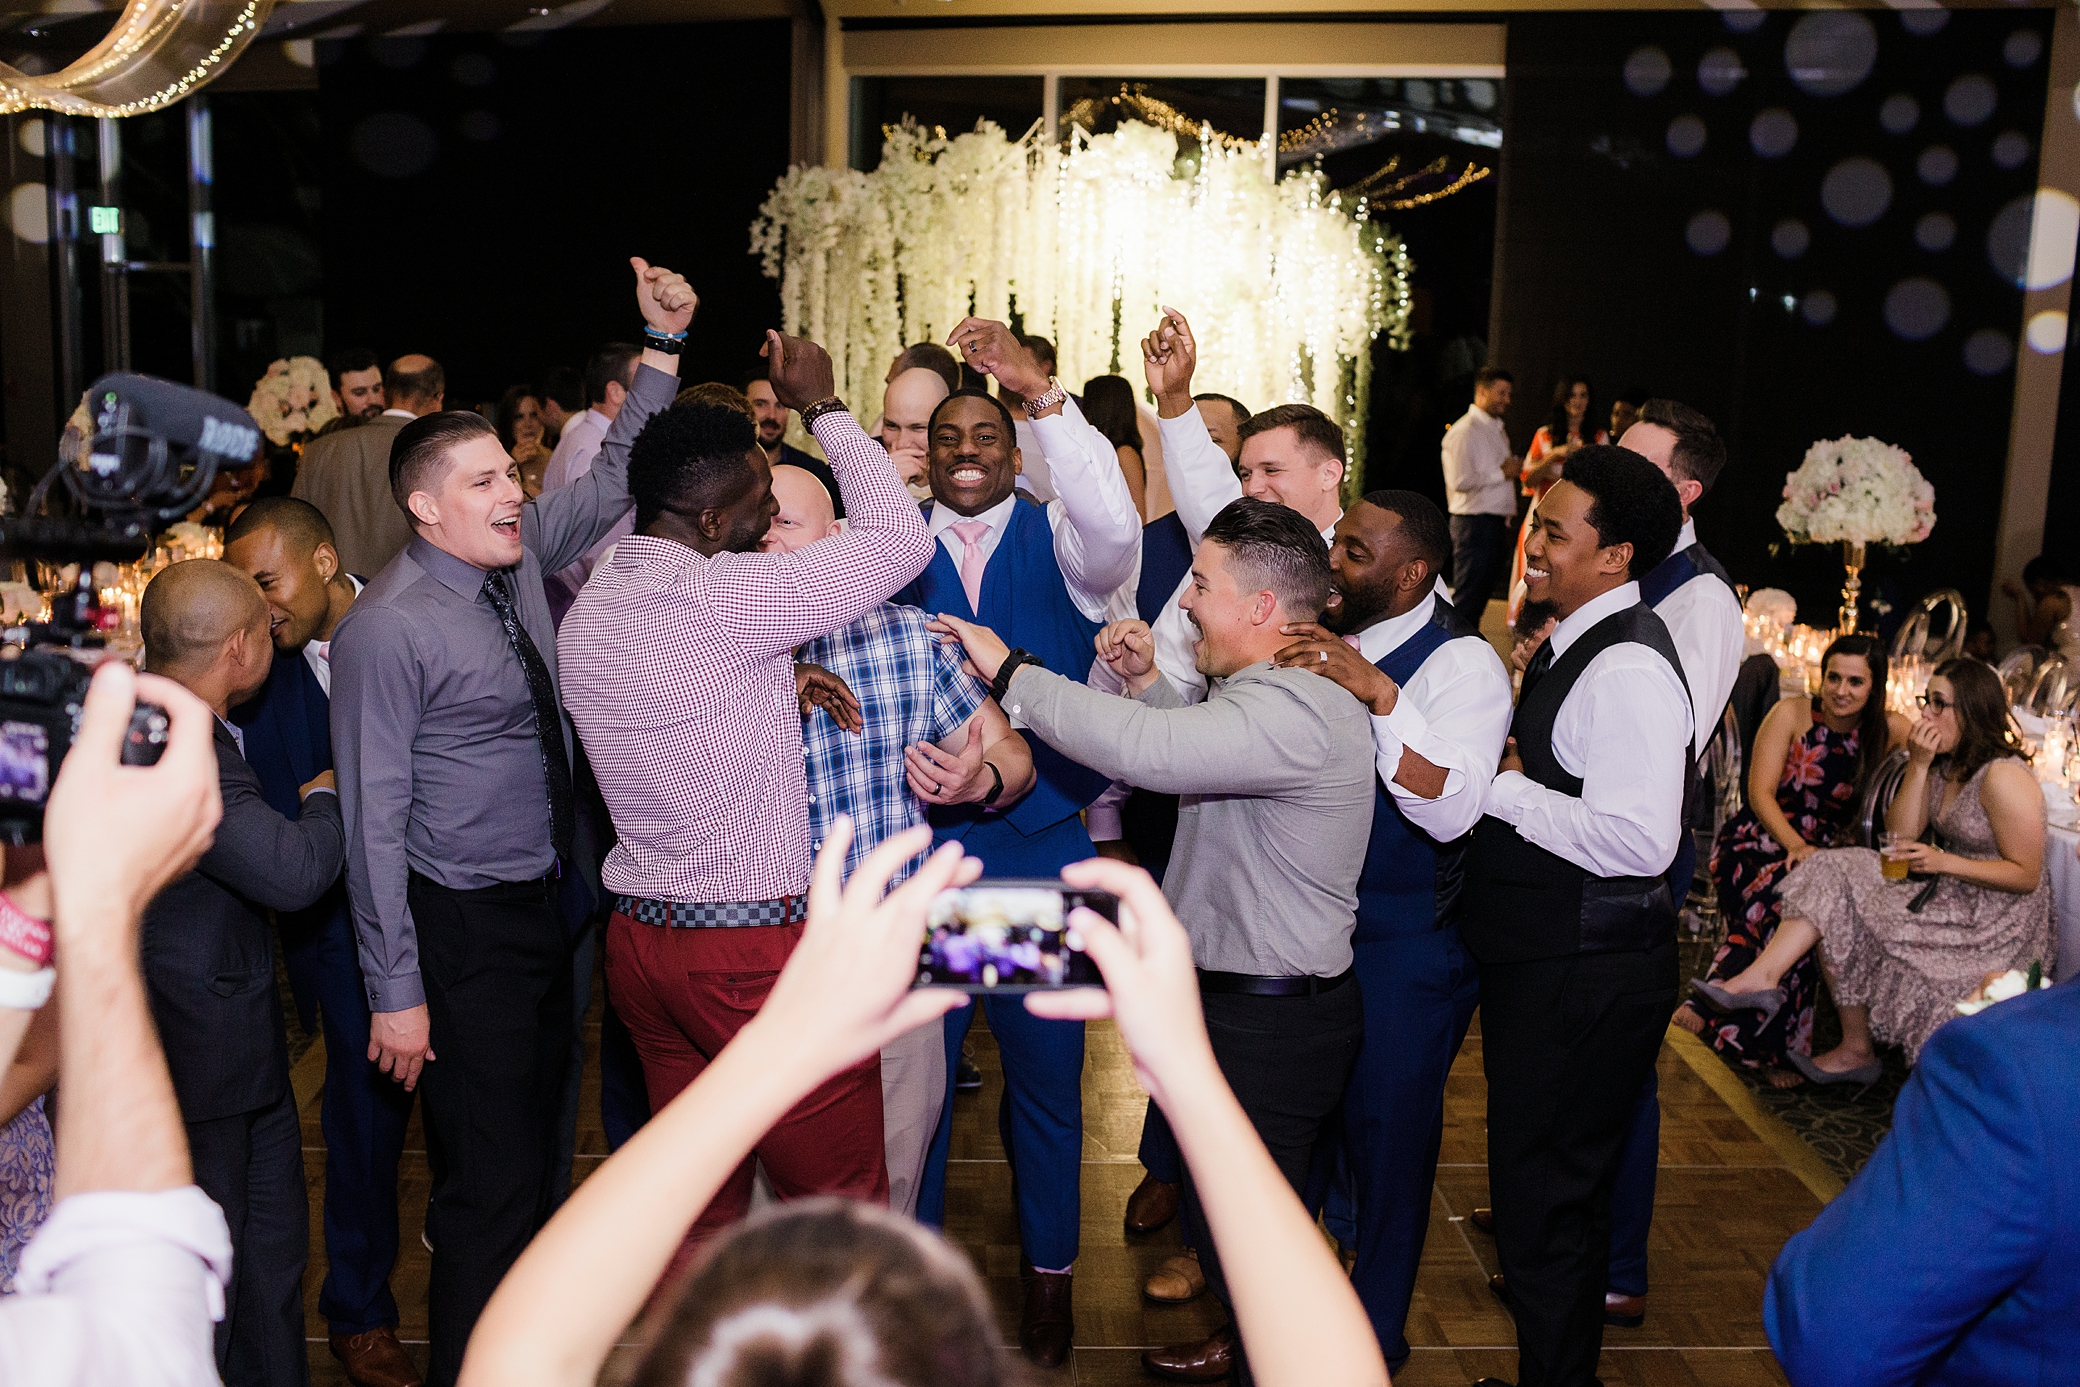 Dance party at wedding reception | Megan Montalvo Photography